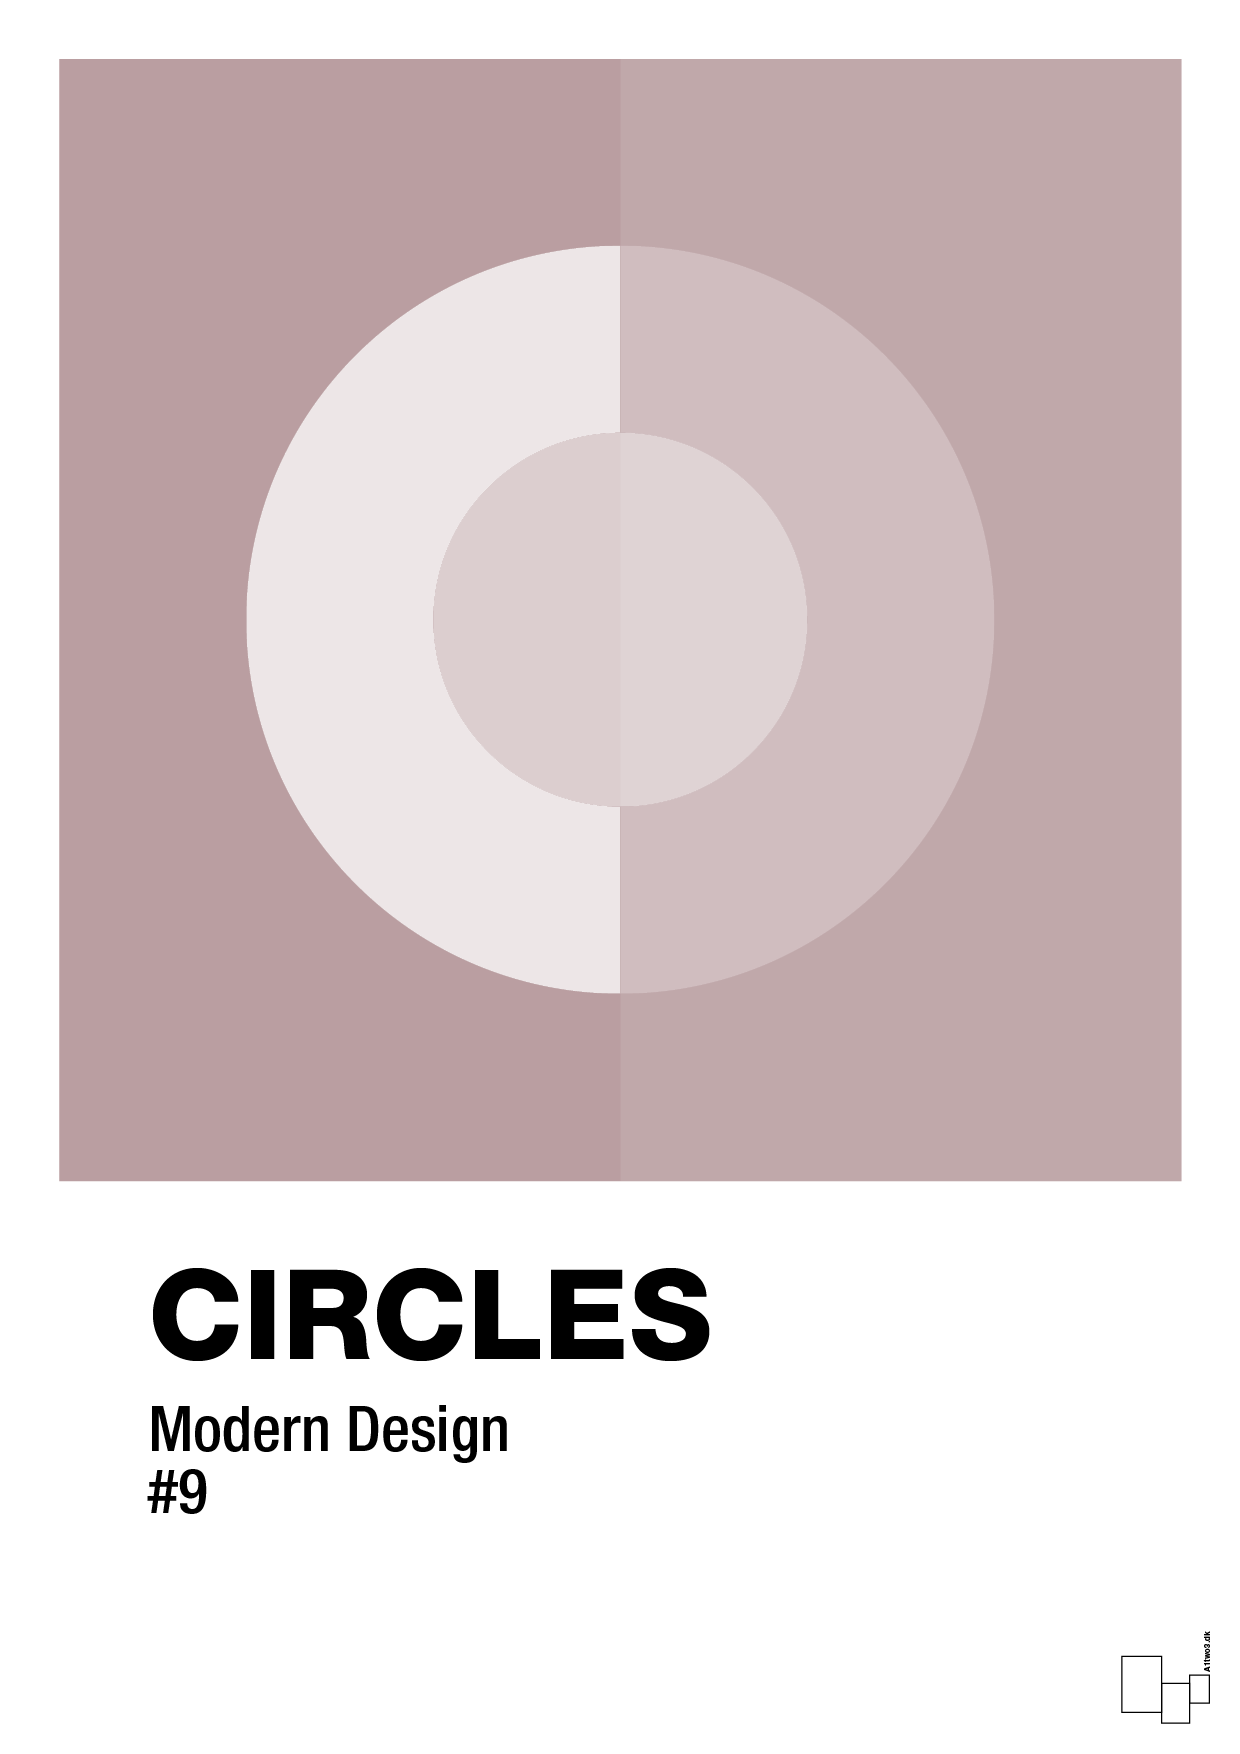 circles #9 - Plakat med Grafik i Light Rose